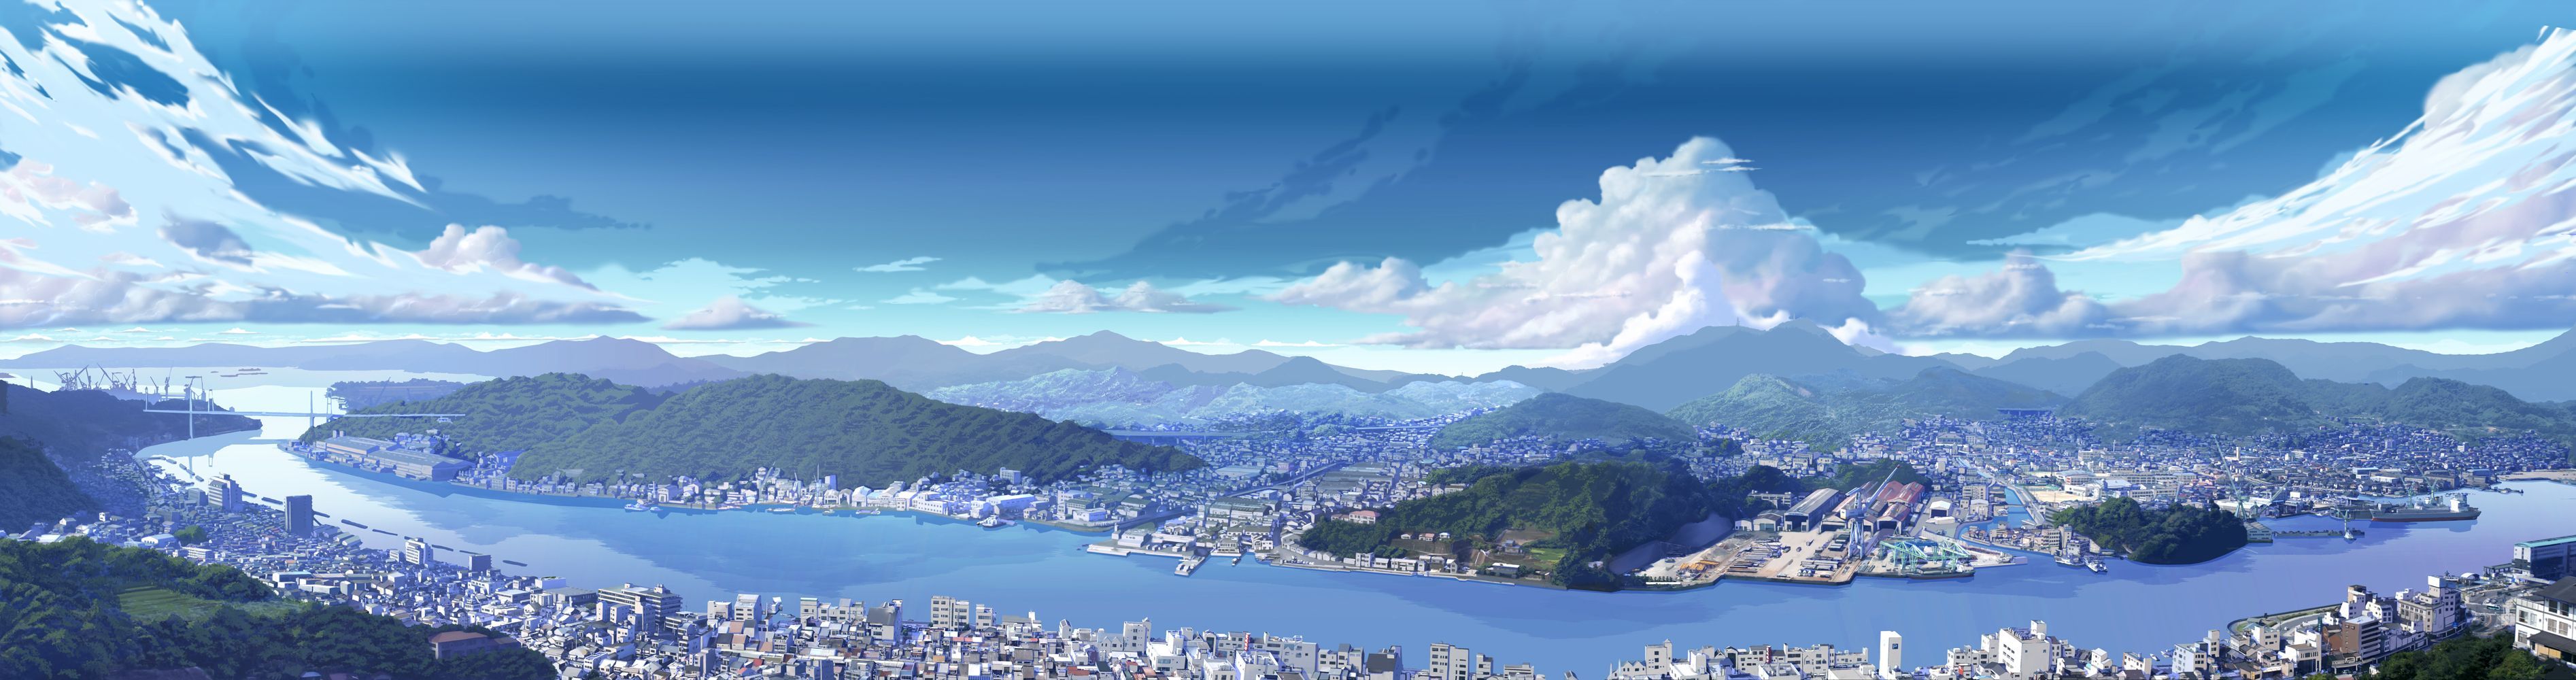 anime wallpaper dual monitor landscape